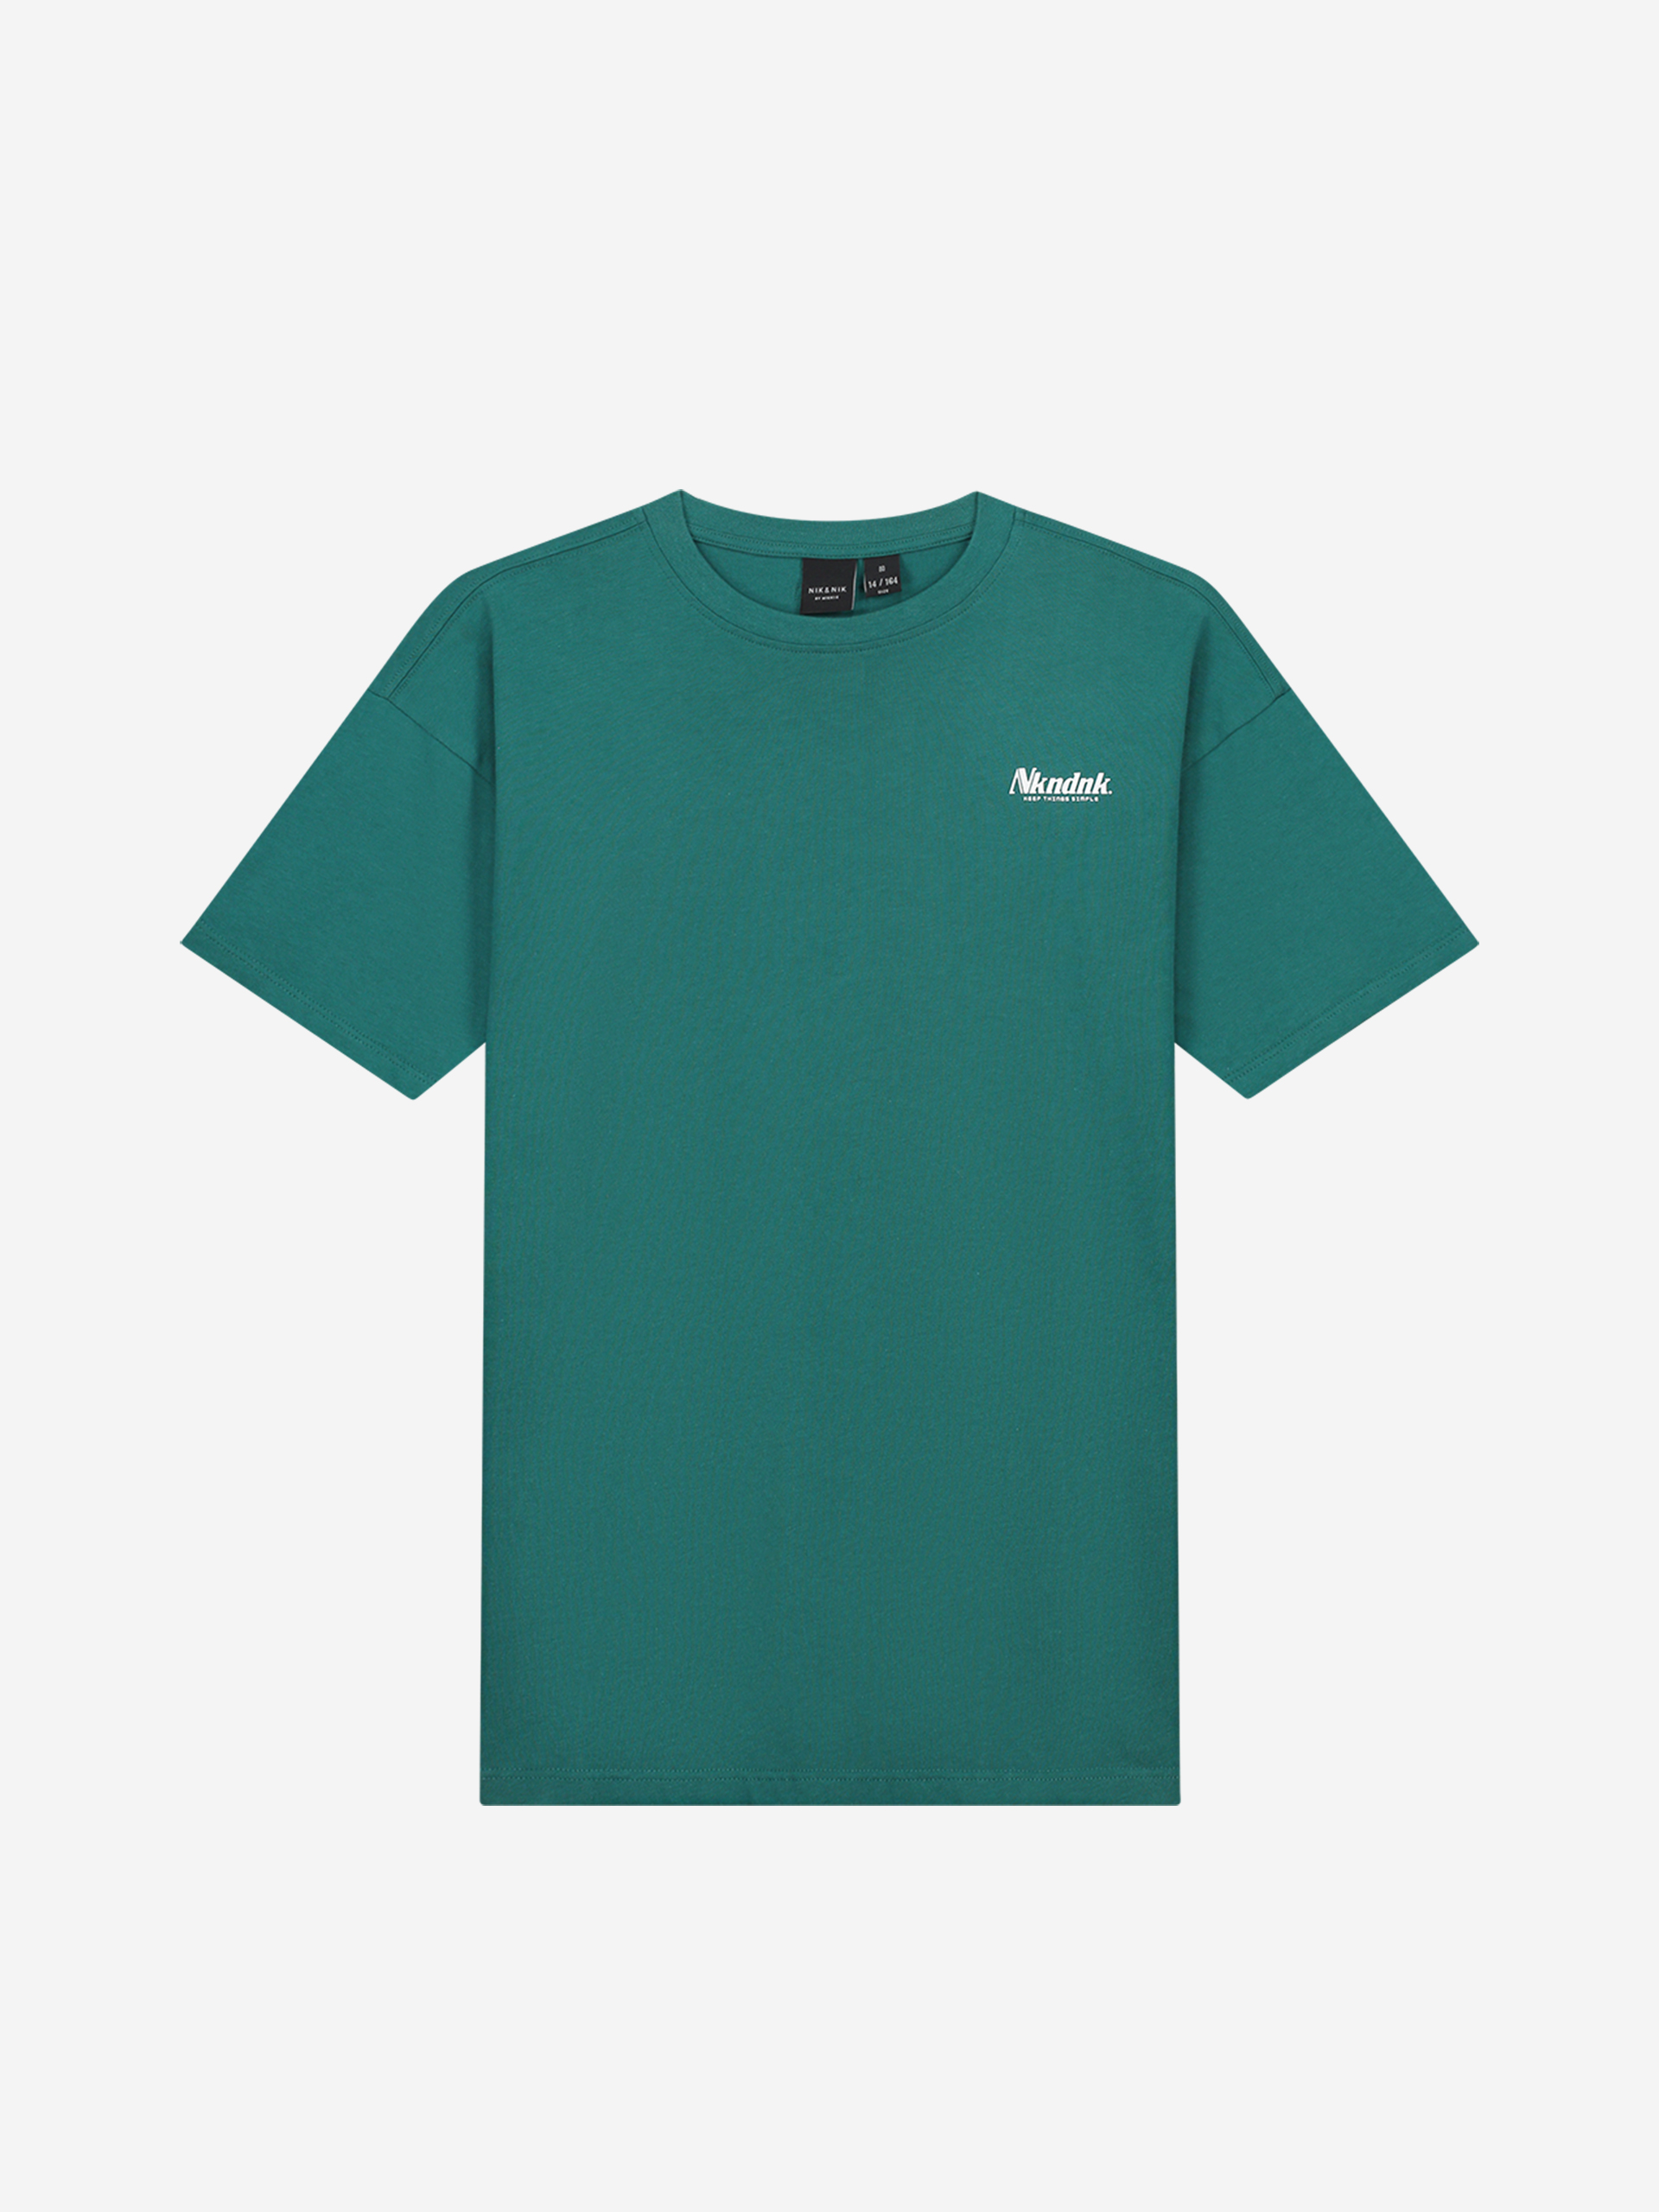 Keep Simple T-Shirt